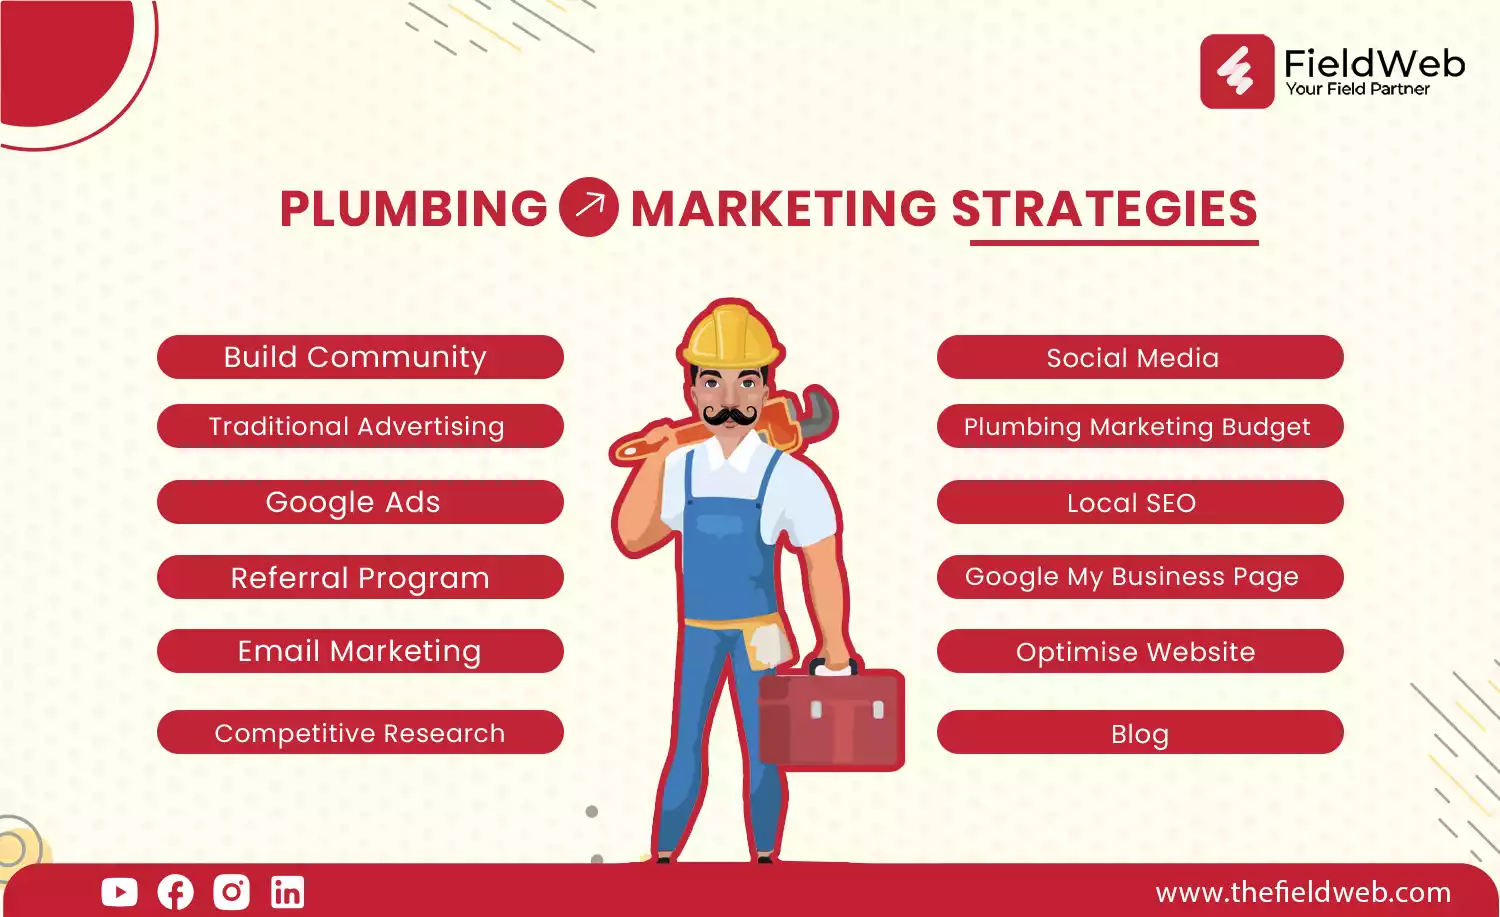 image is displaying various marketing strategies plumbing business should adopt